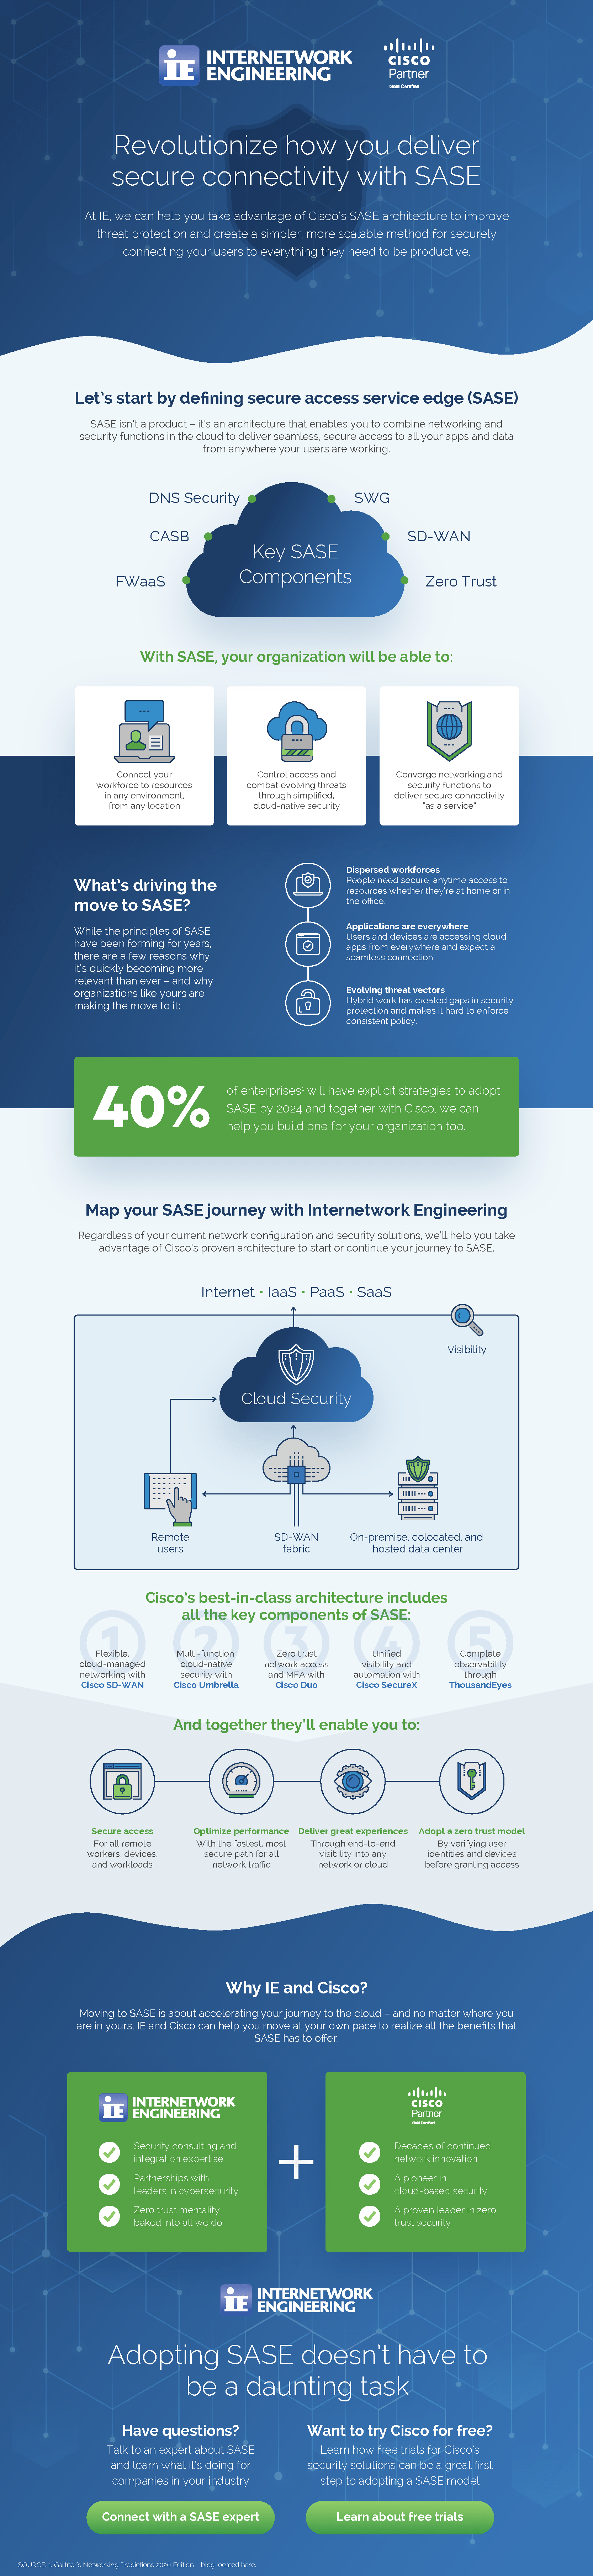 Internetwork Engineering SASE Infographic